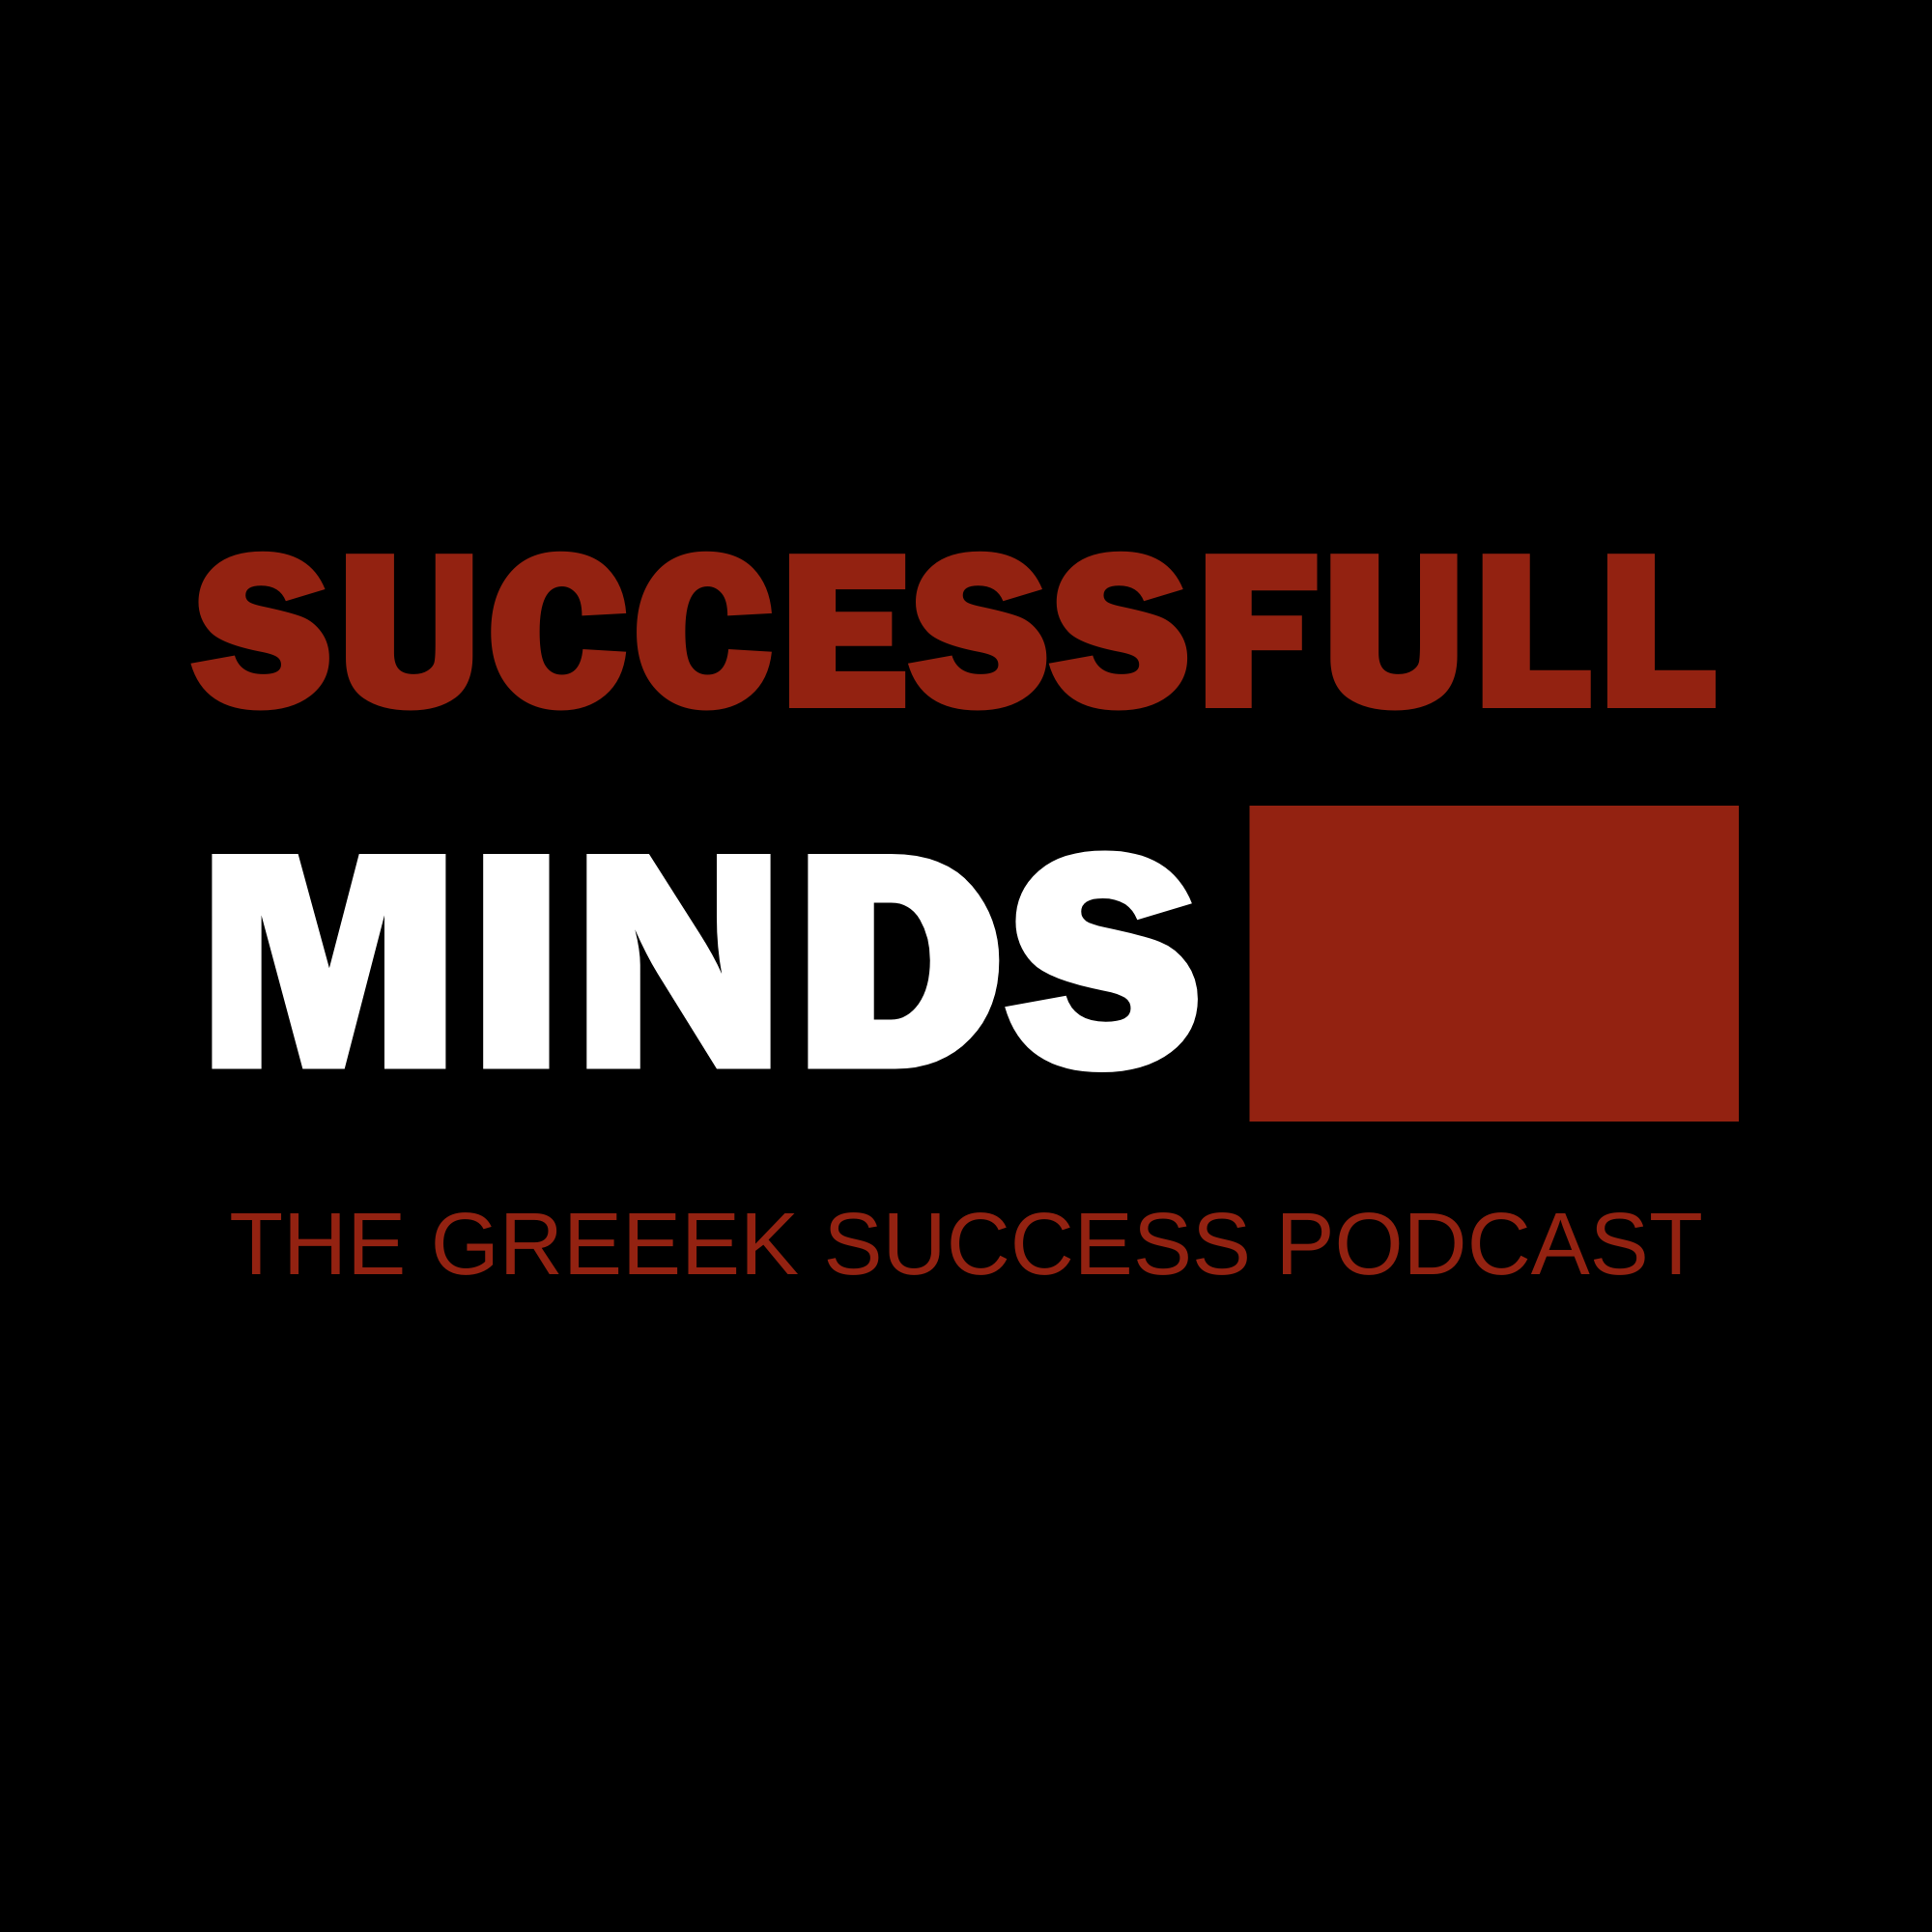 SUCCESSFUL MINDS - THE GREEK SUCCESS PODCAST